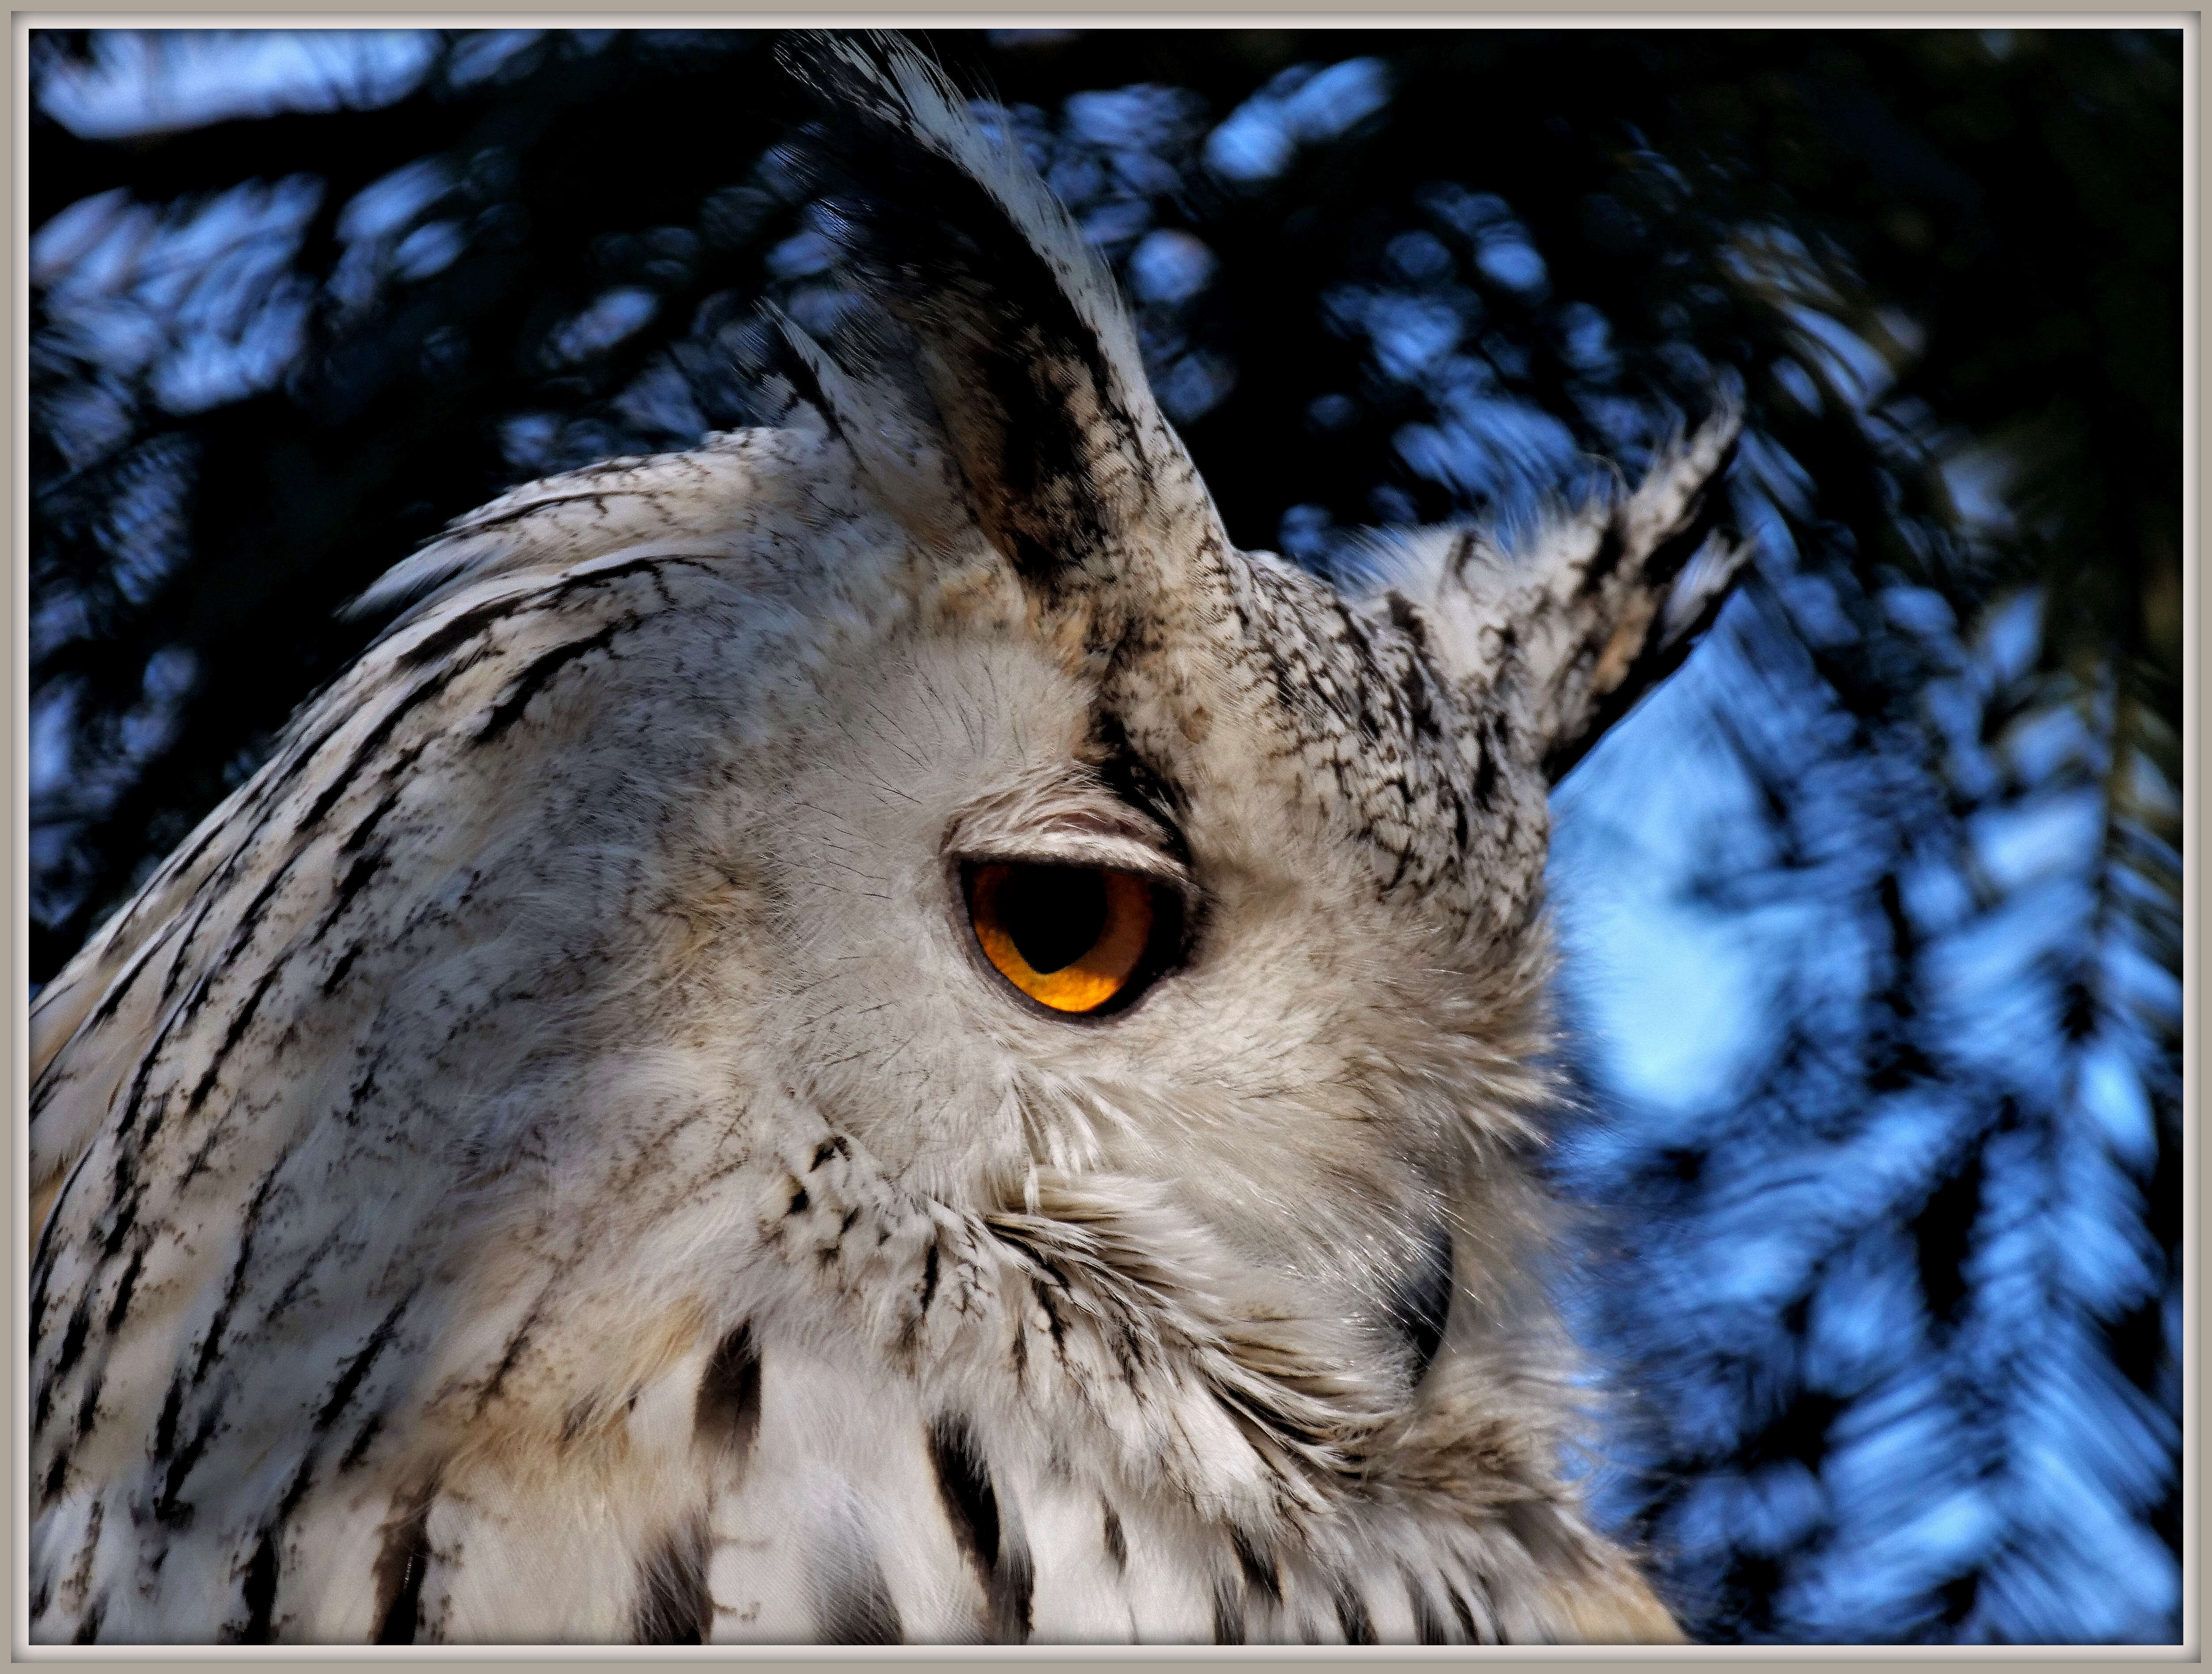 Image of Eurasian Eagle Owl